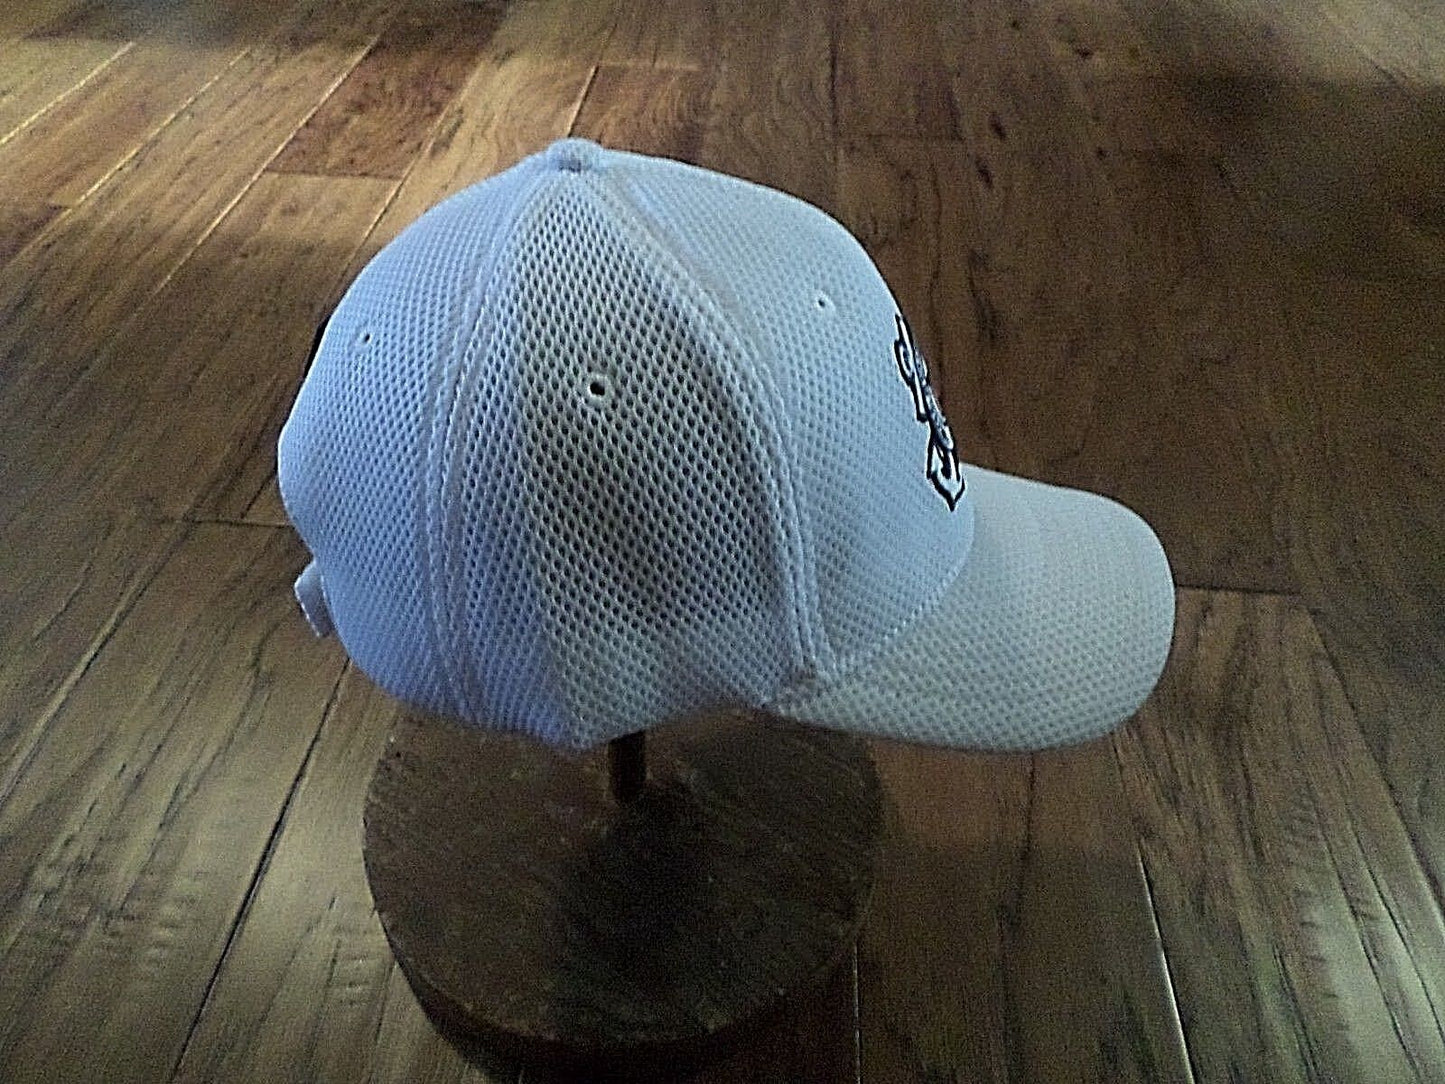 New U.S Coast Guard Hat Air Mesh 3-D Embroidered CG White Baseball Cap